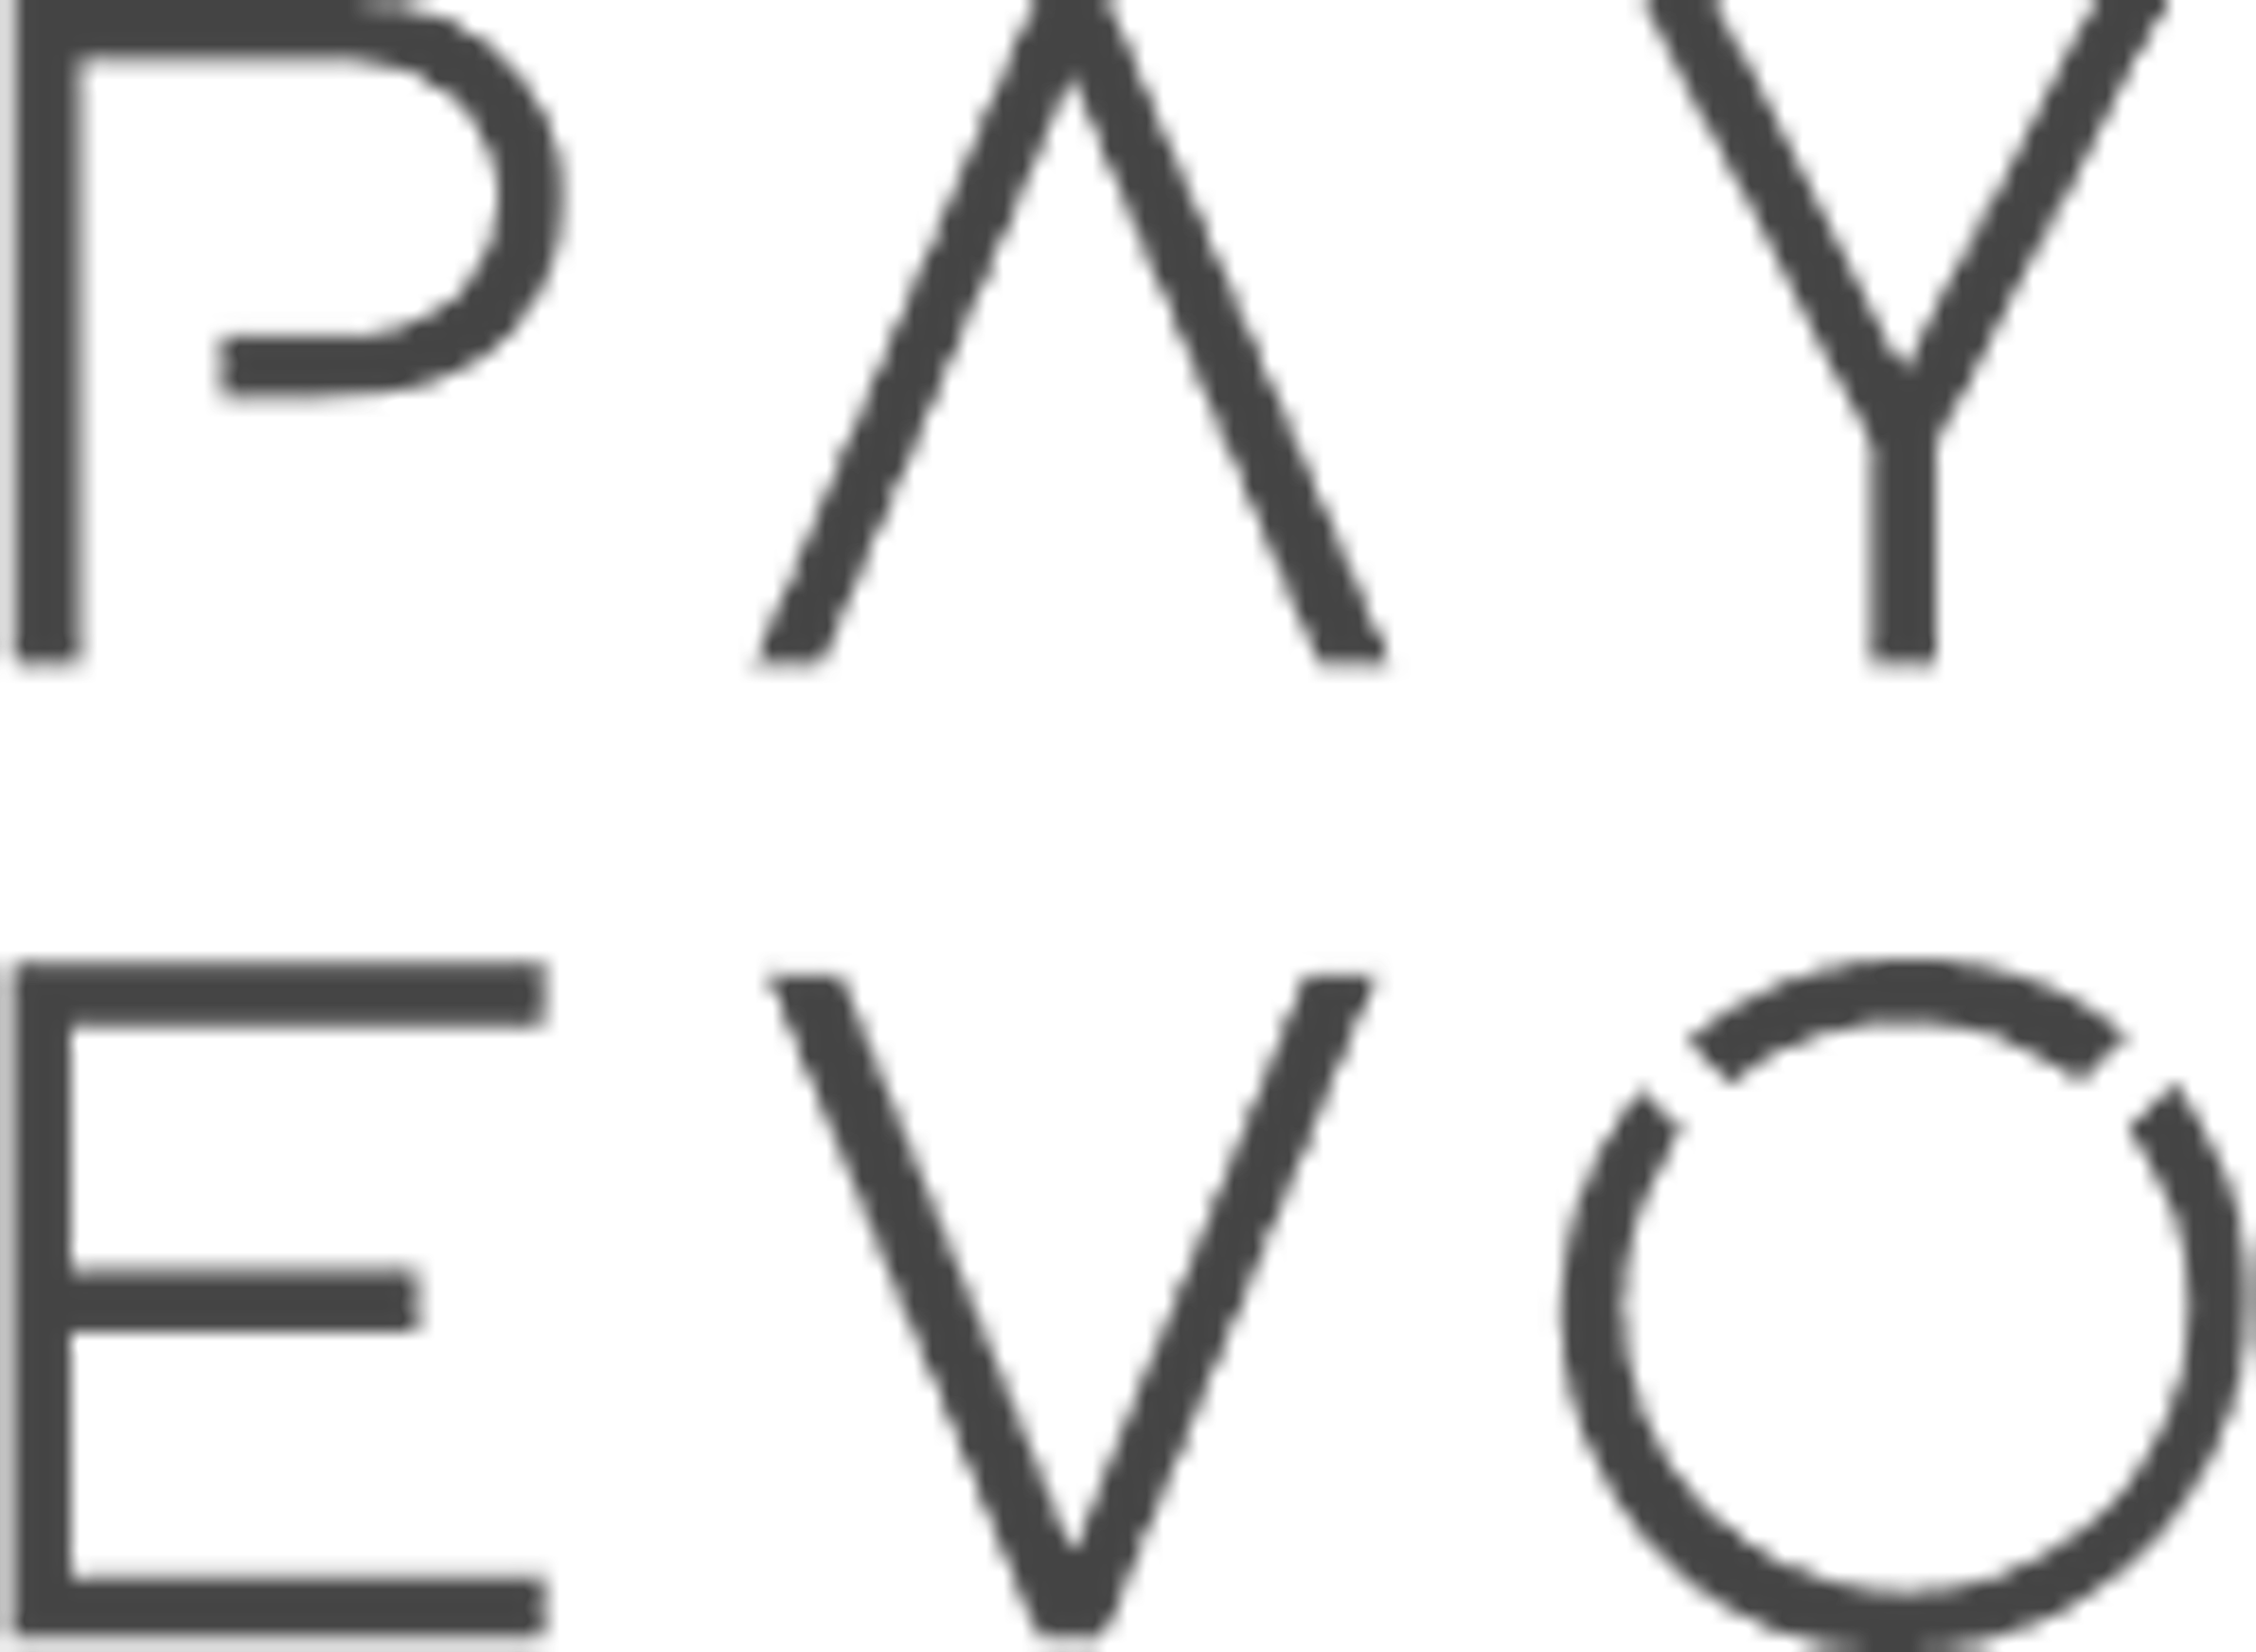 Payment Evolution Logo